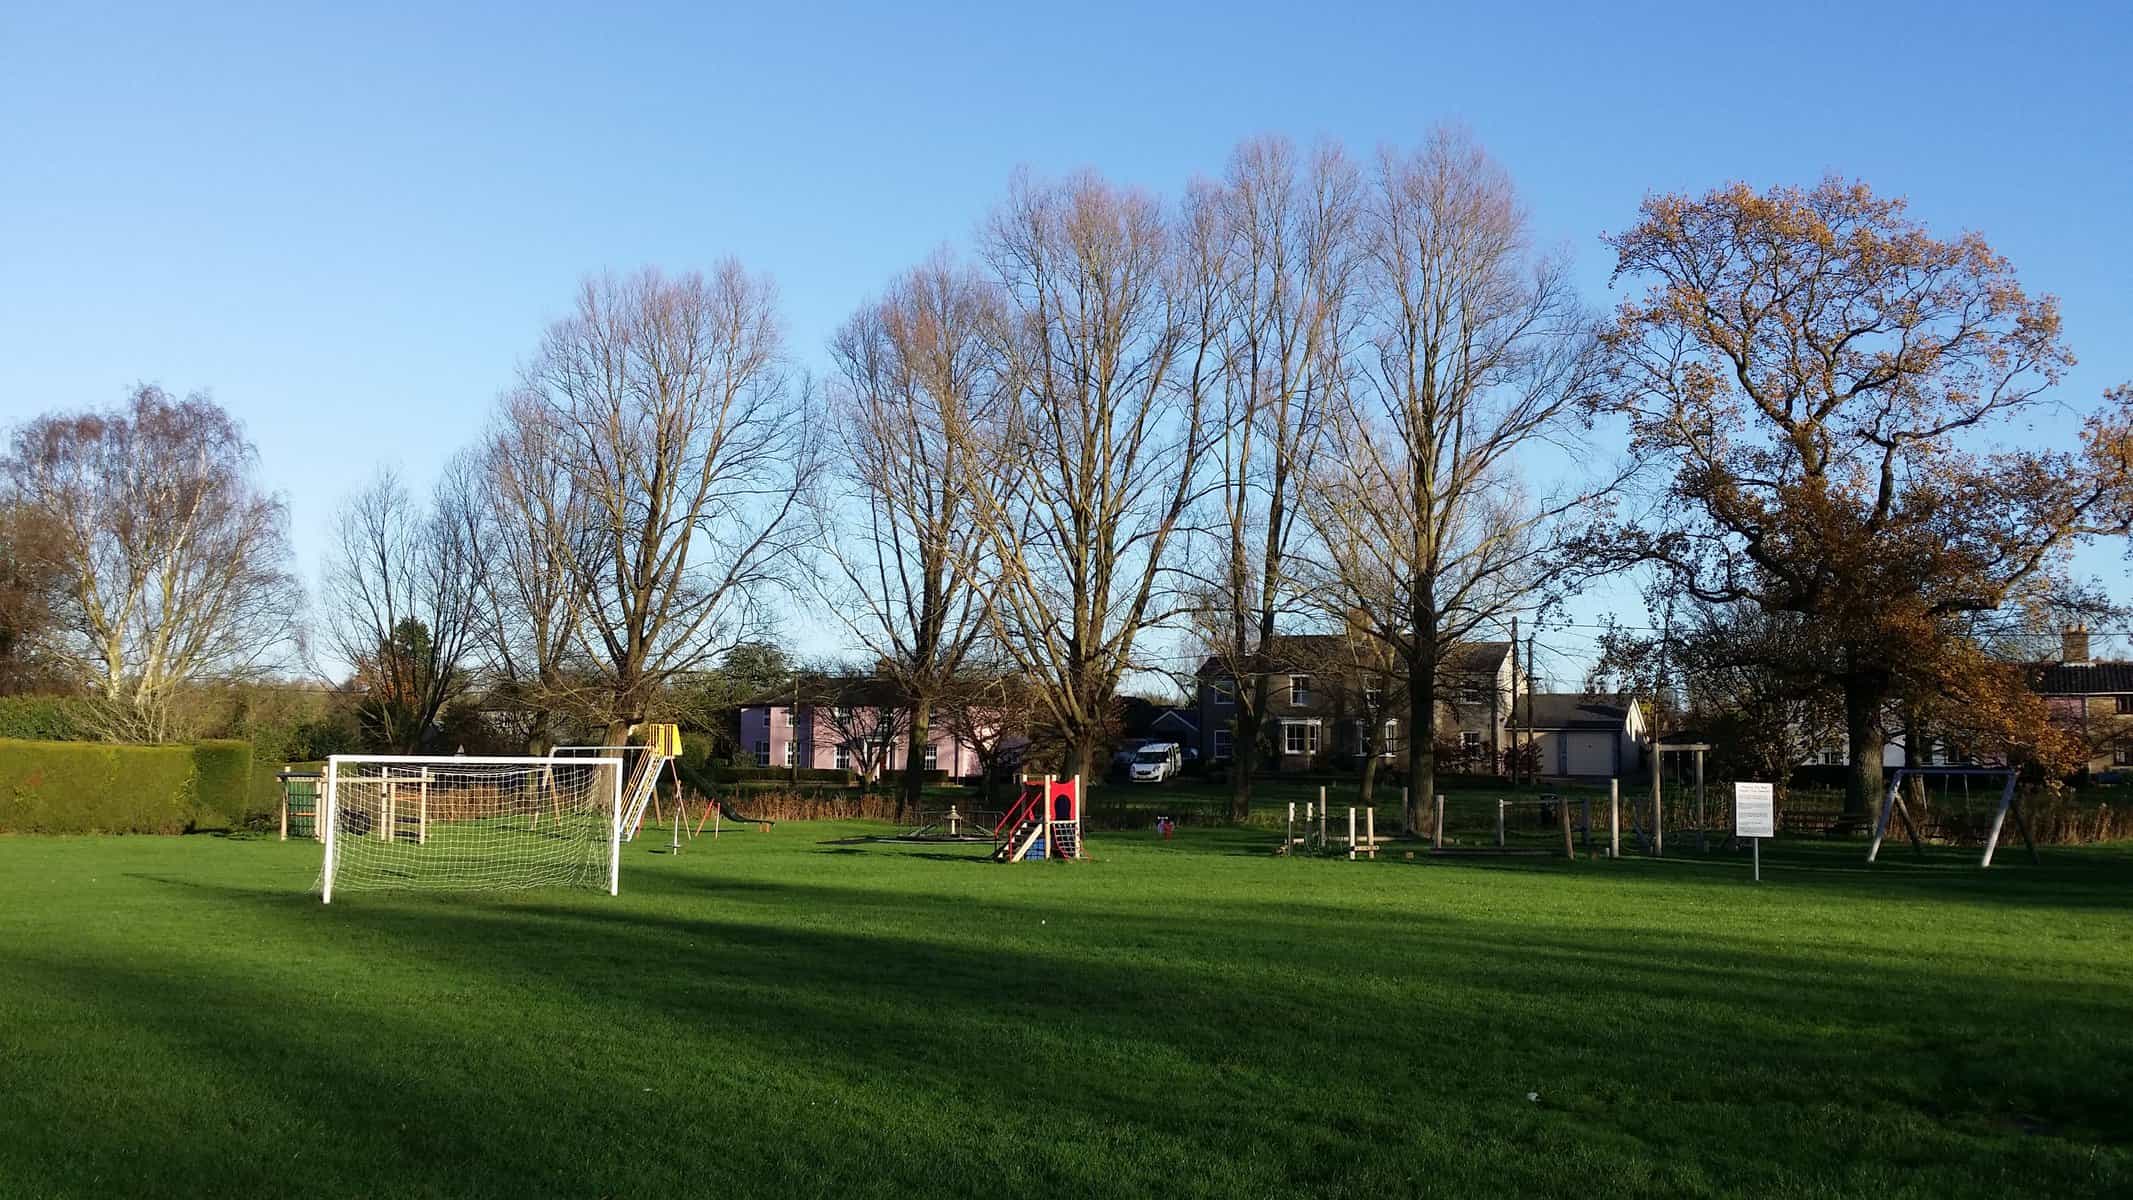 Playground on the Green, Beyton, Suffolk